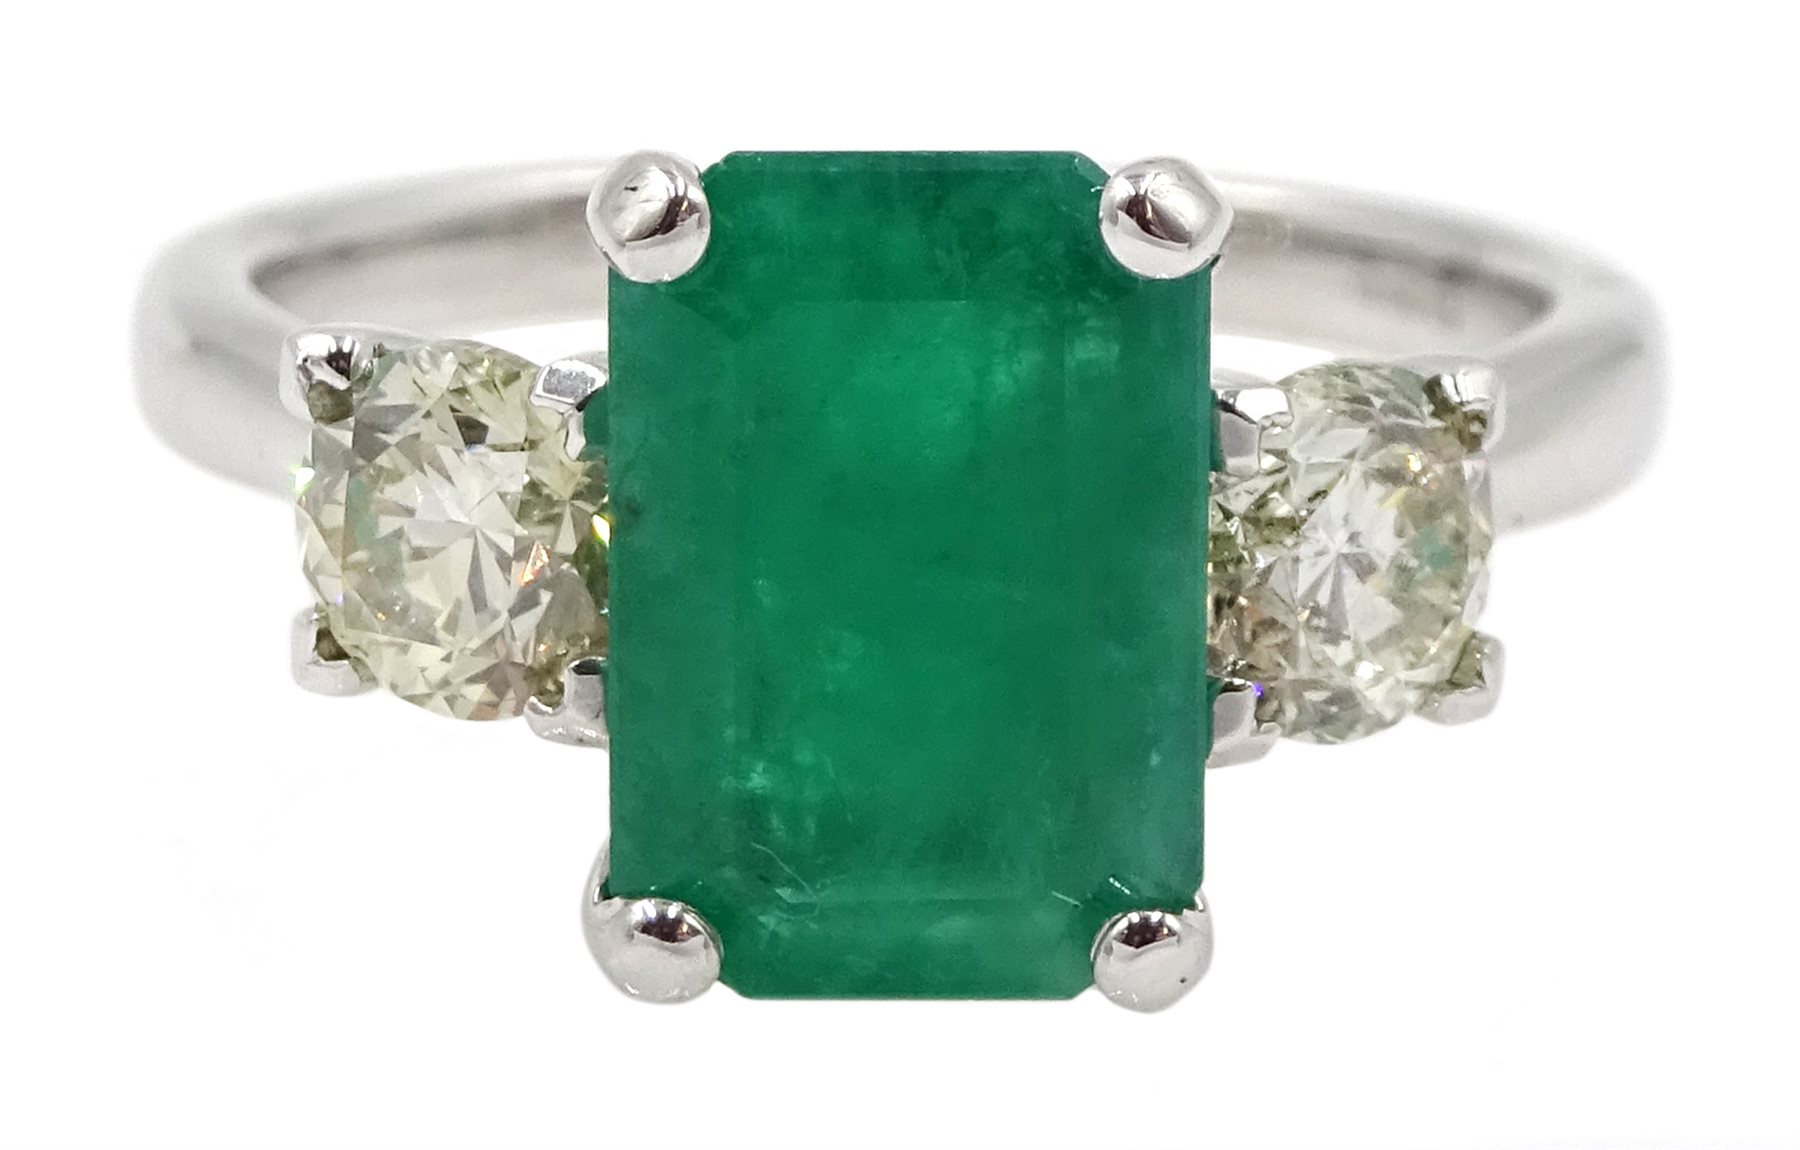 18ct white gold emerald and diamond three stone ring